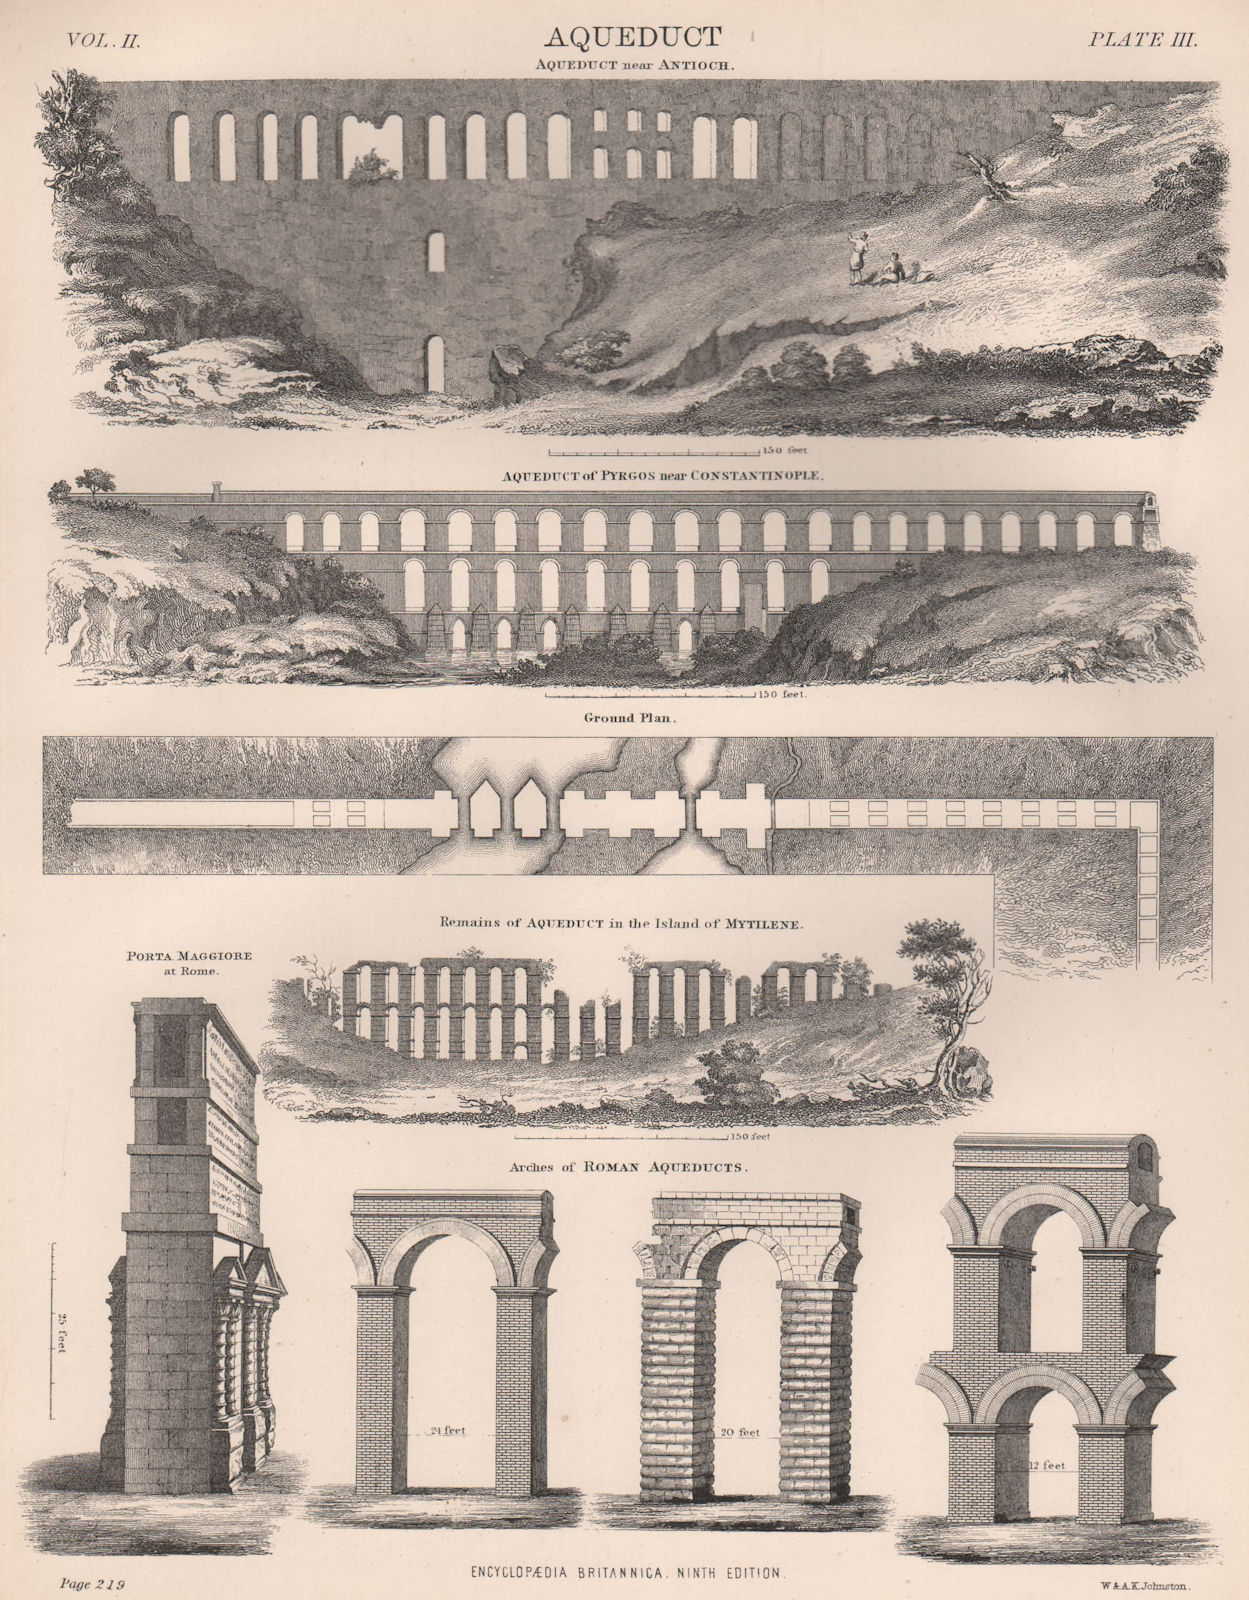 Associate Product AQUEDUCTS Antioch Pyrgos Mytilene/Lesbos Porta Maggiore, Rome Roman Arches 1898